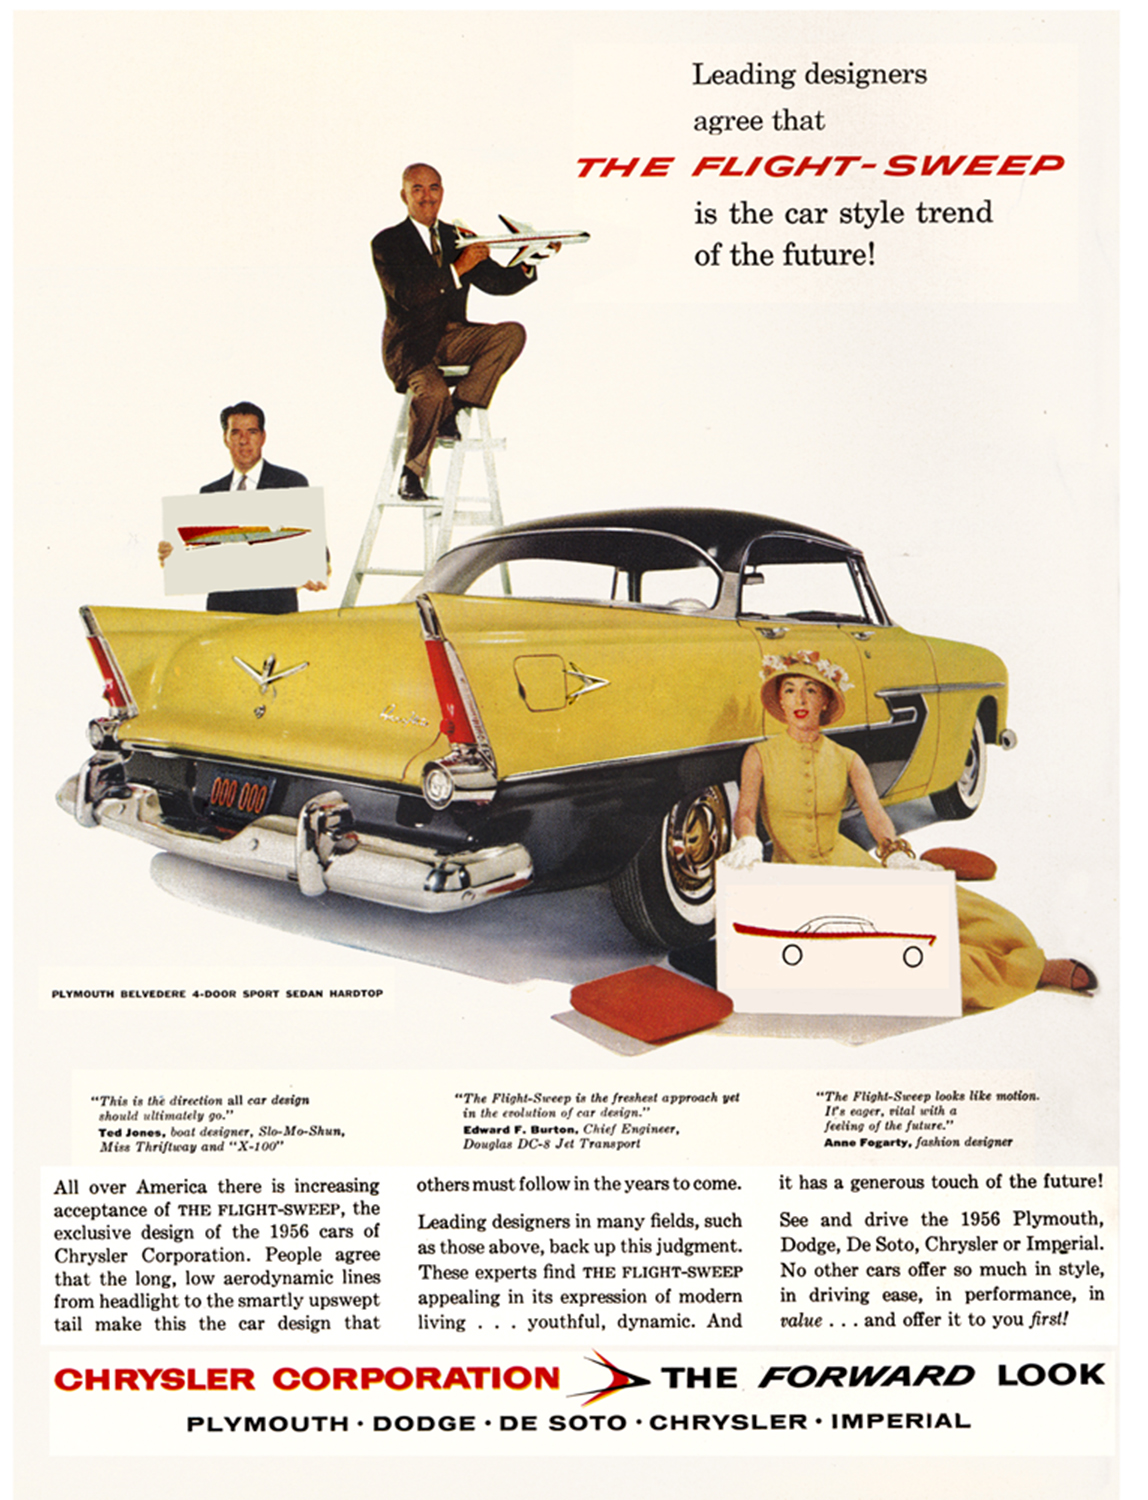 https://media.spokesman.com/photos/2015/05/29/1956_Plymouth_Chrysler_Forward_look_ad.jpg